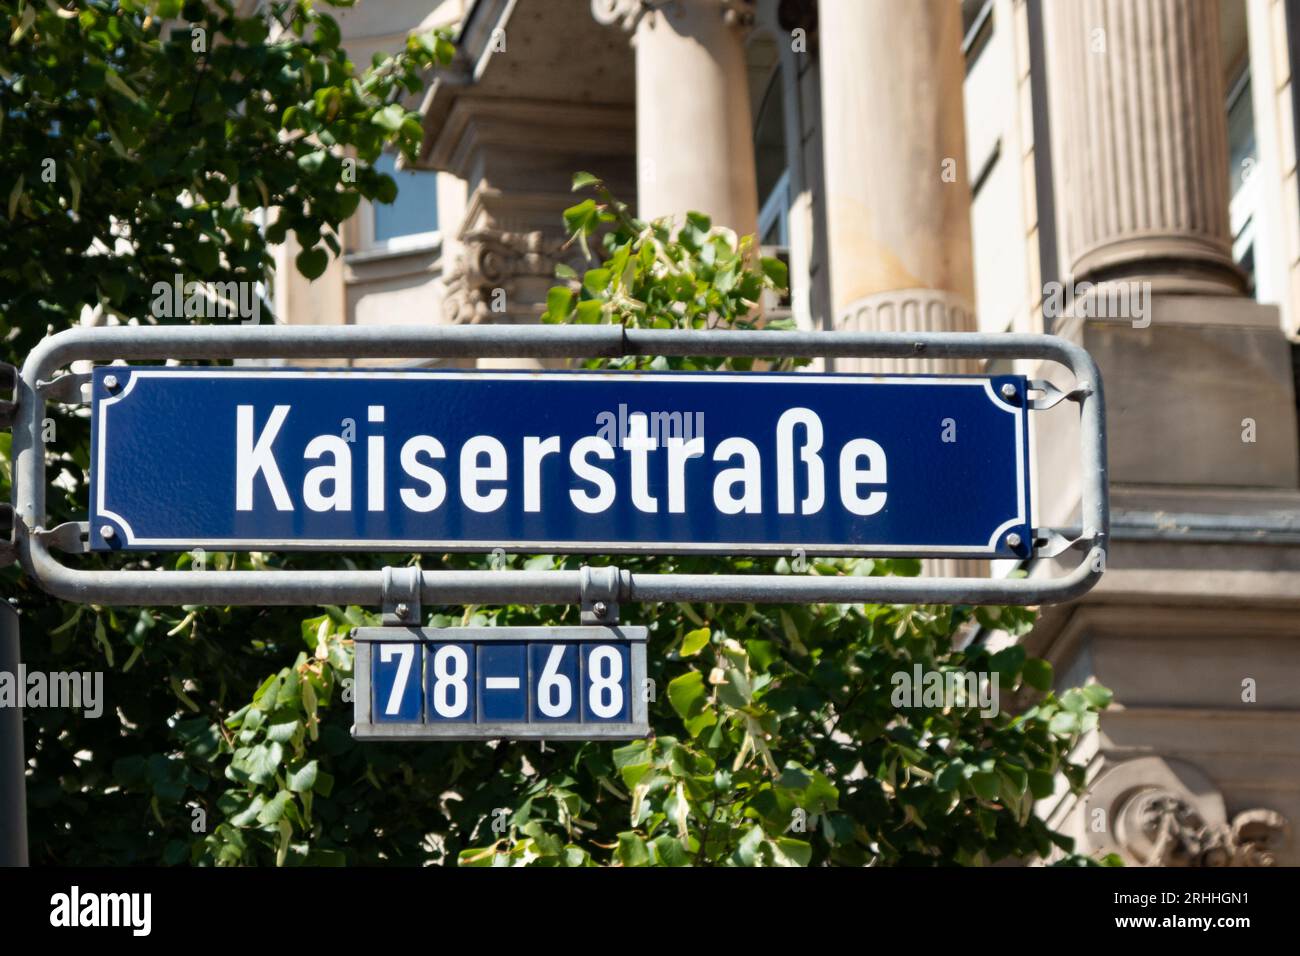 streetsign name Kaiserstrasse - engl: Emperors street - in Frankfurt, Germany Stock Photo